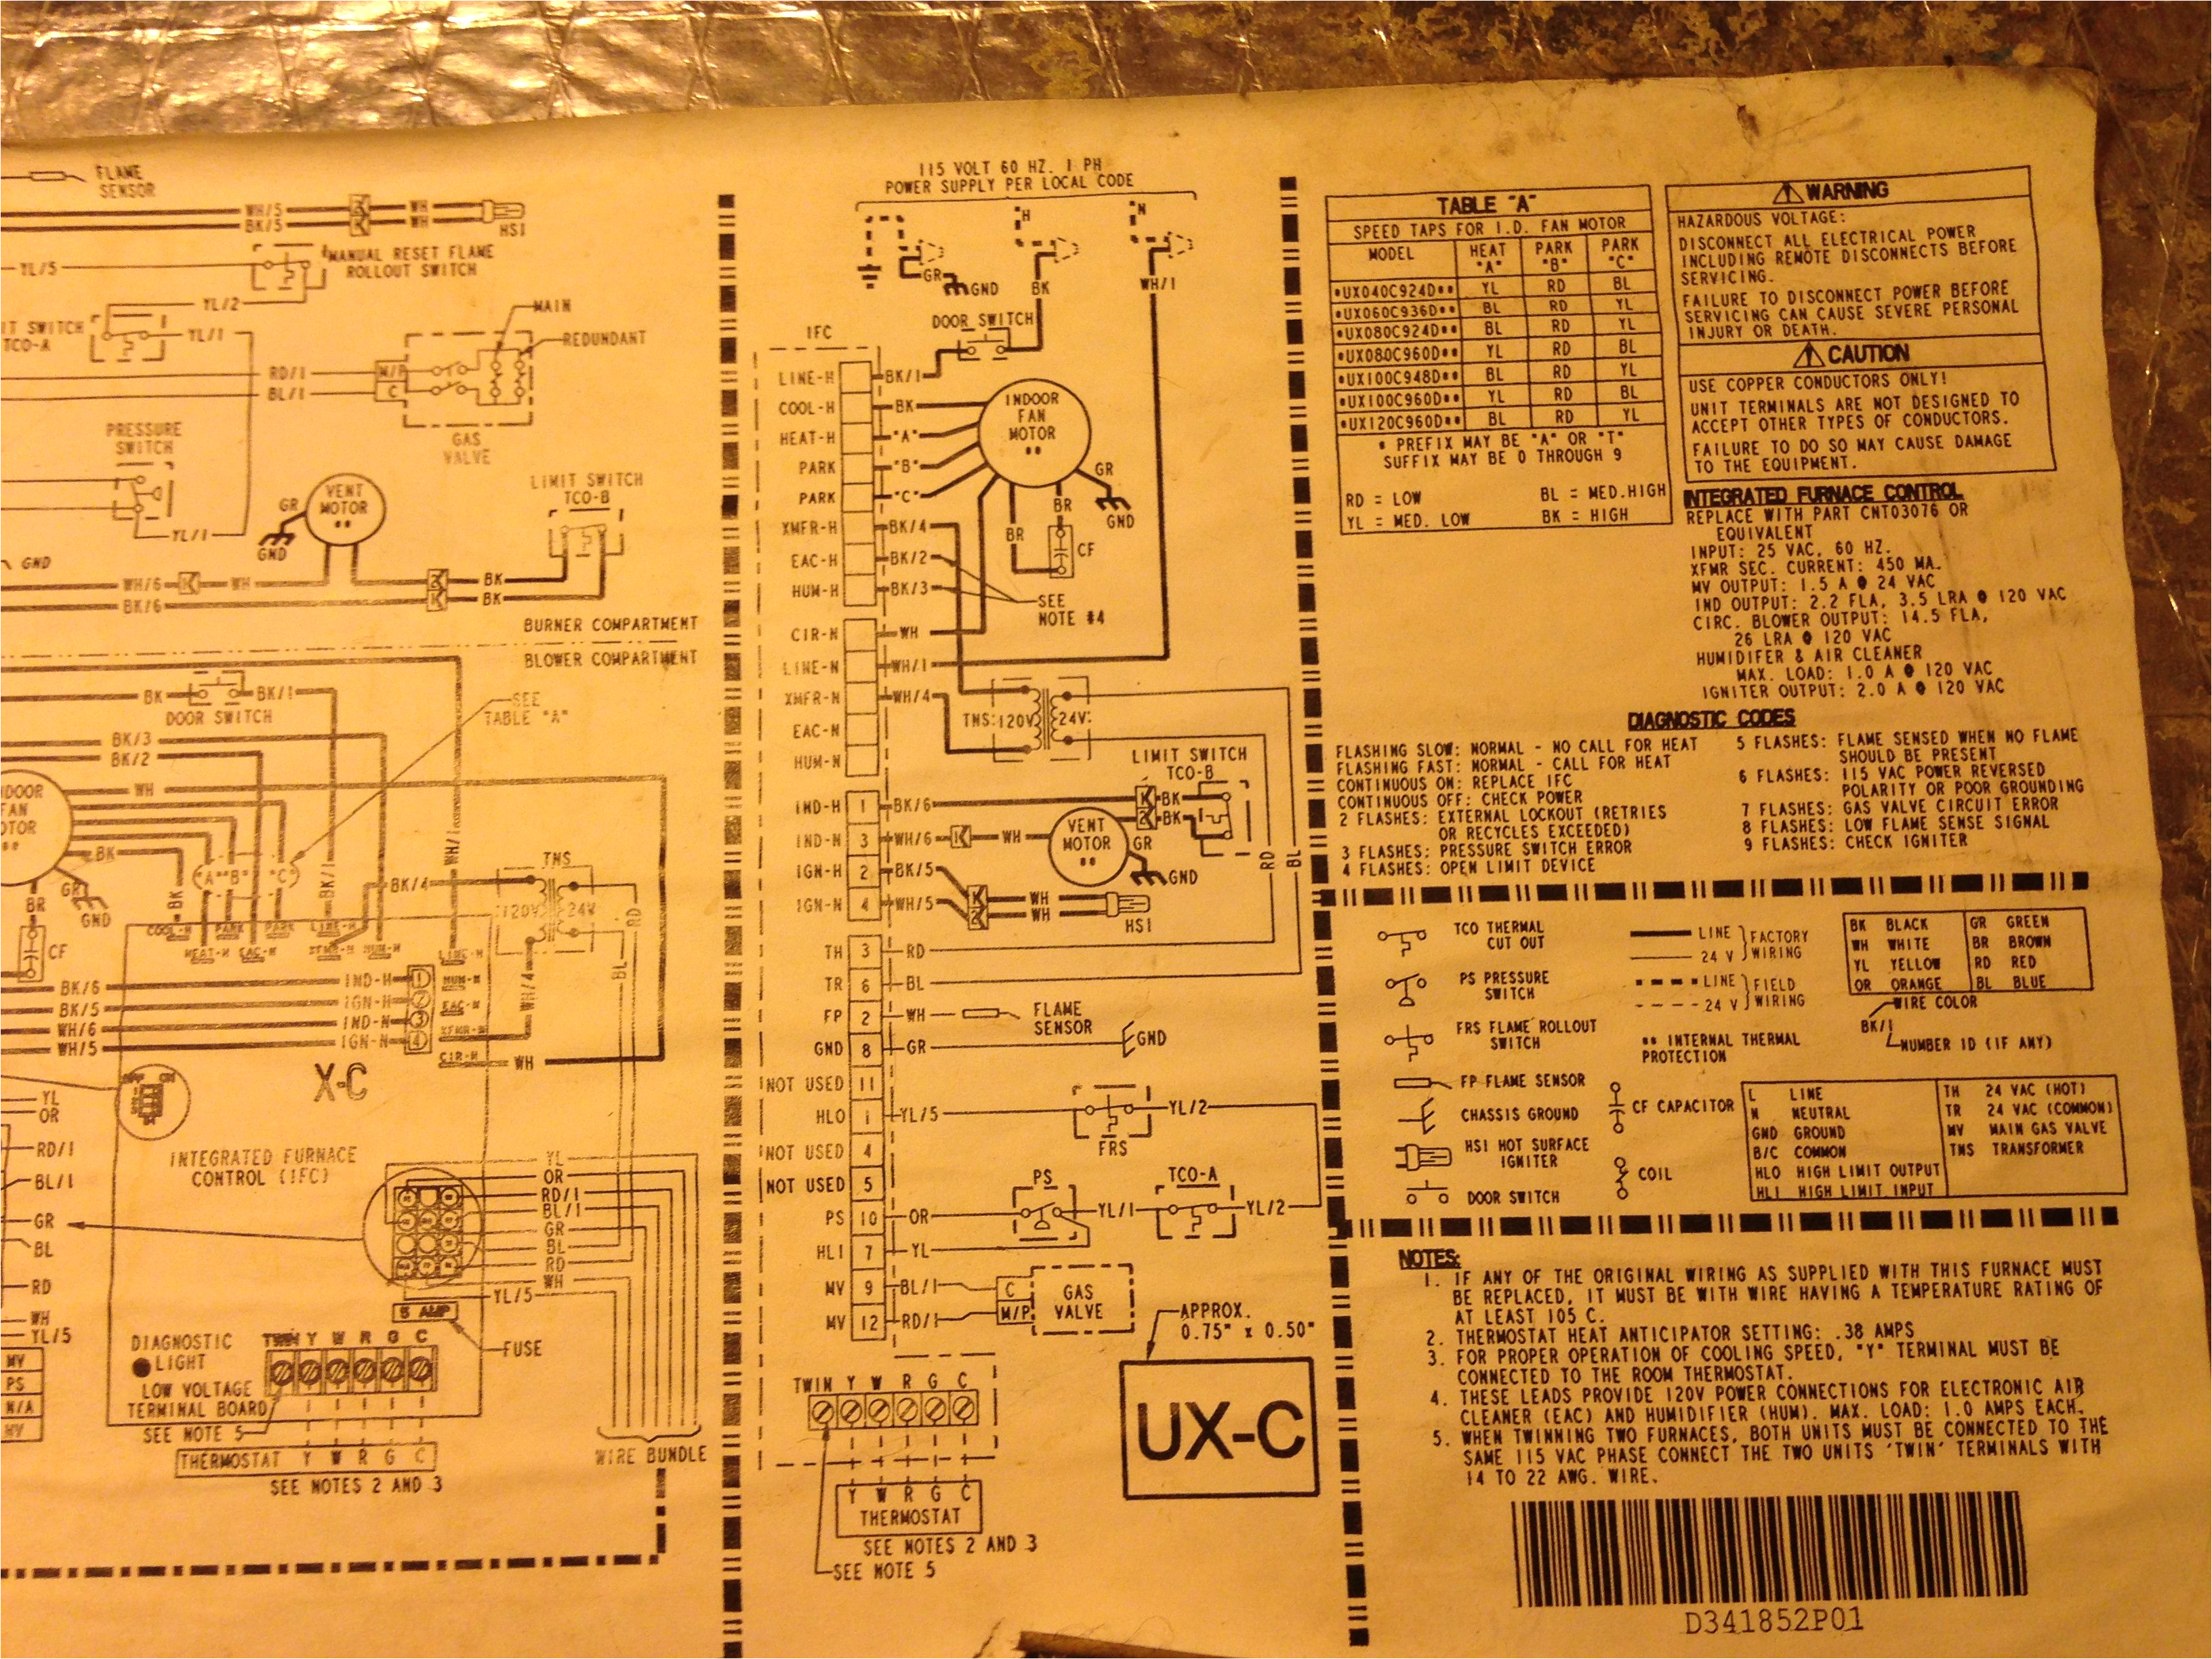 trane xr90 ac fan is not turning on control board flush is off img 1190 jpg trane xr90 wiring diagram